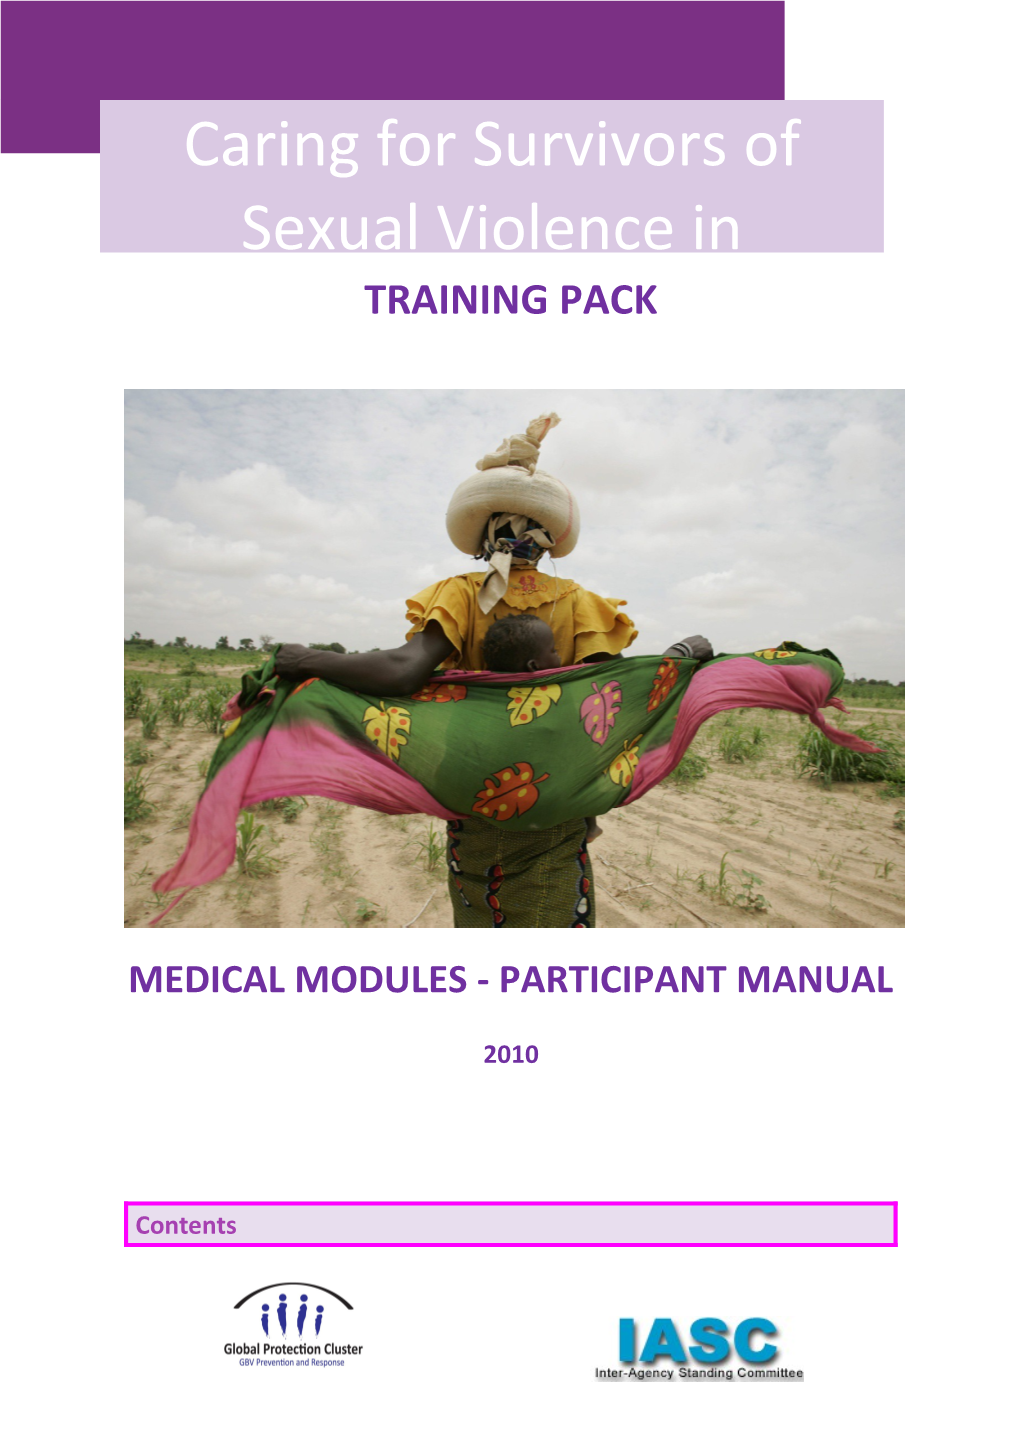 Medical Modules - Participant Manual